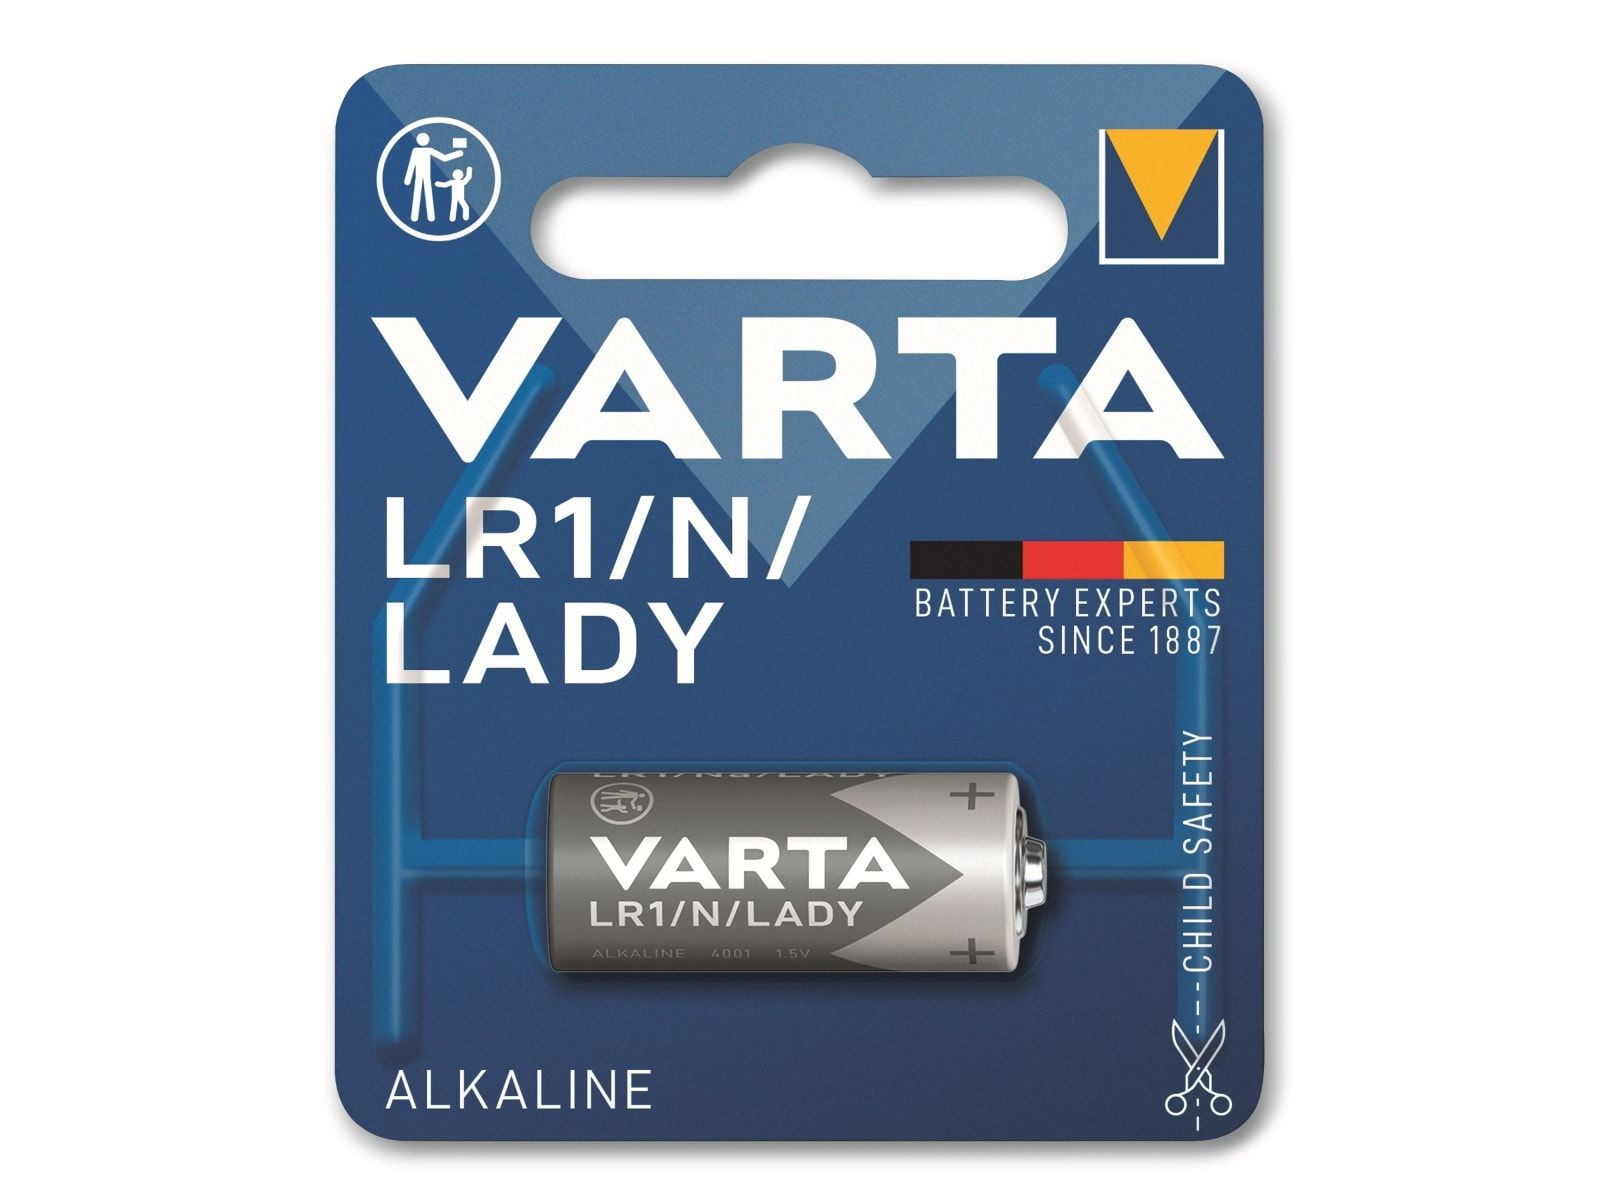 VARTA Batterie Alkaline, LR1, N, LADY, 1.5V, Electronics, 1 Stück von Varta